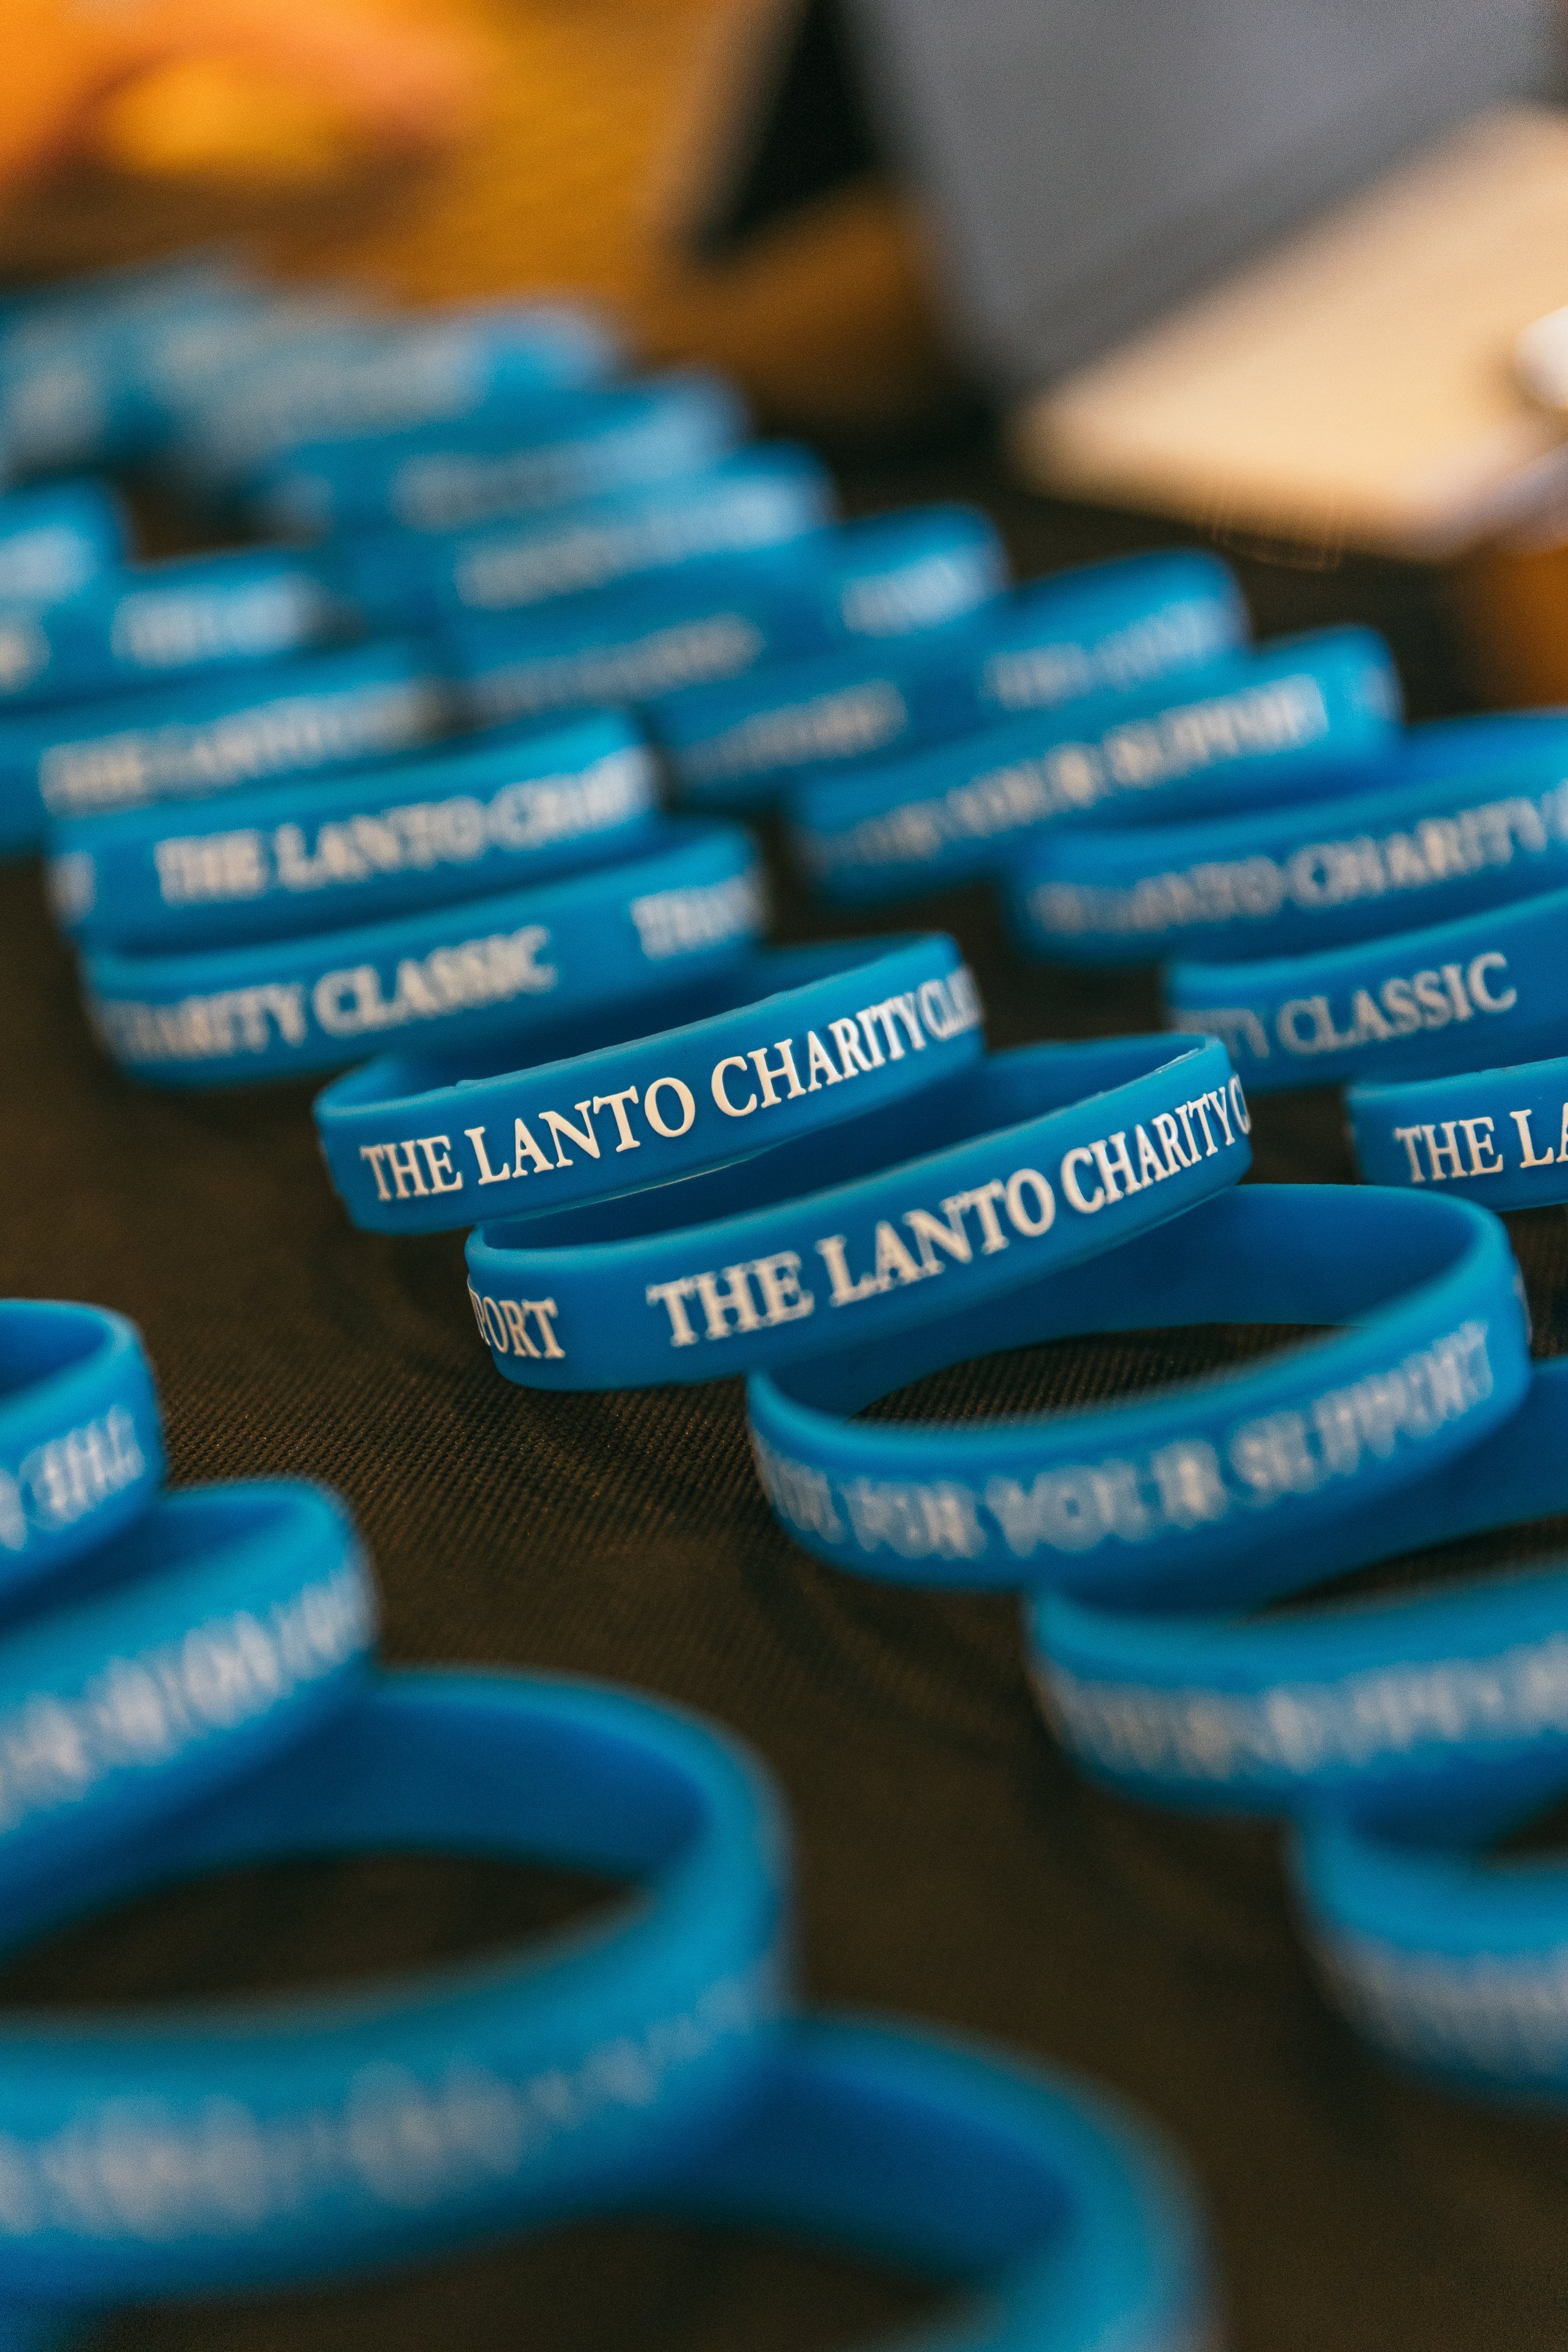 Lanto Charity Classic bracelets. (Copy)